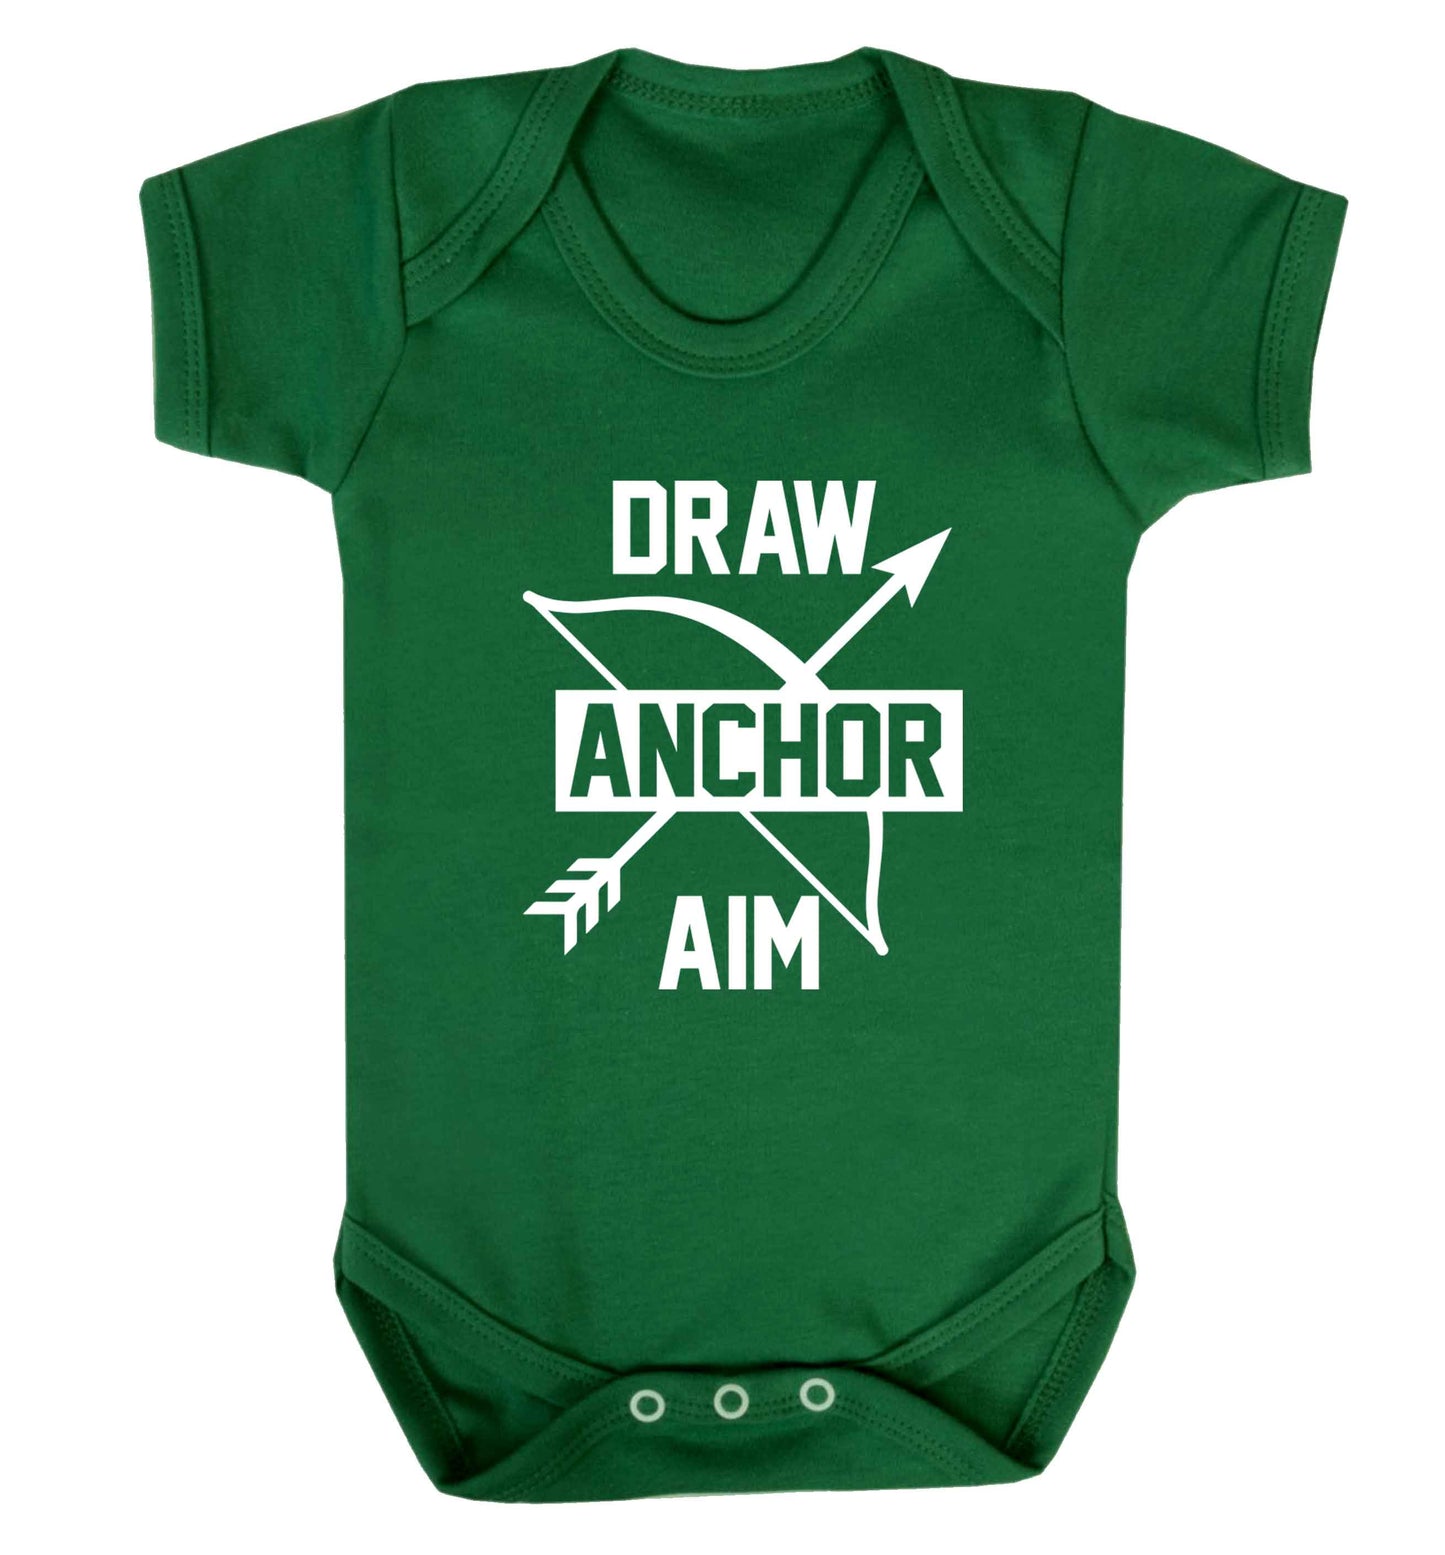 Draw anchor aim Baby Vest green 18-24 months